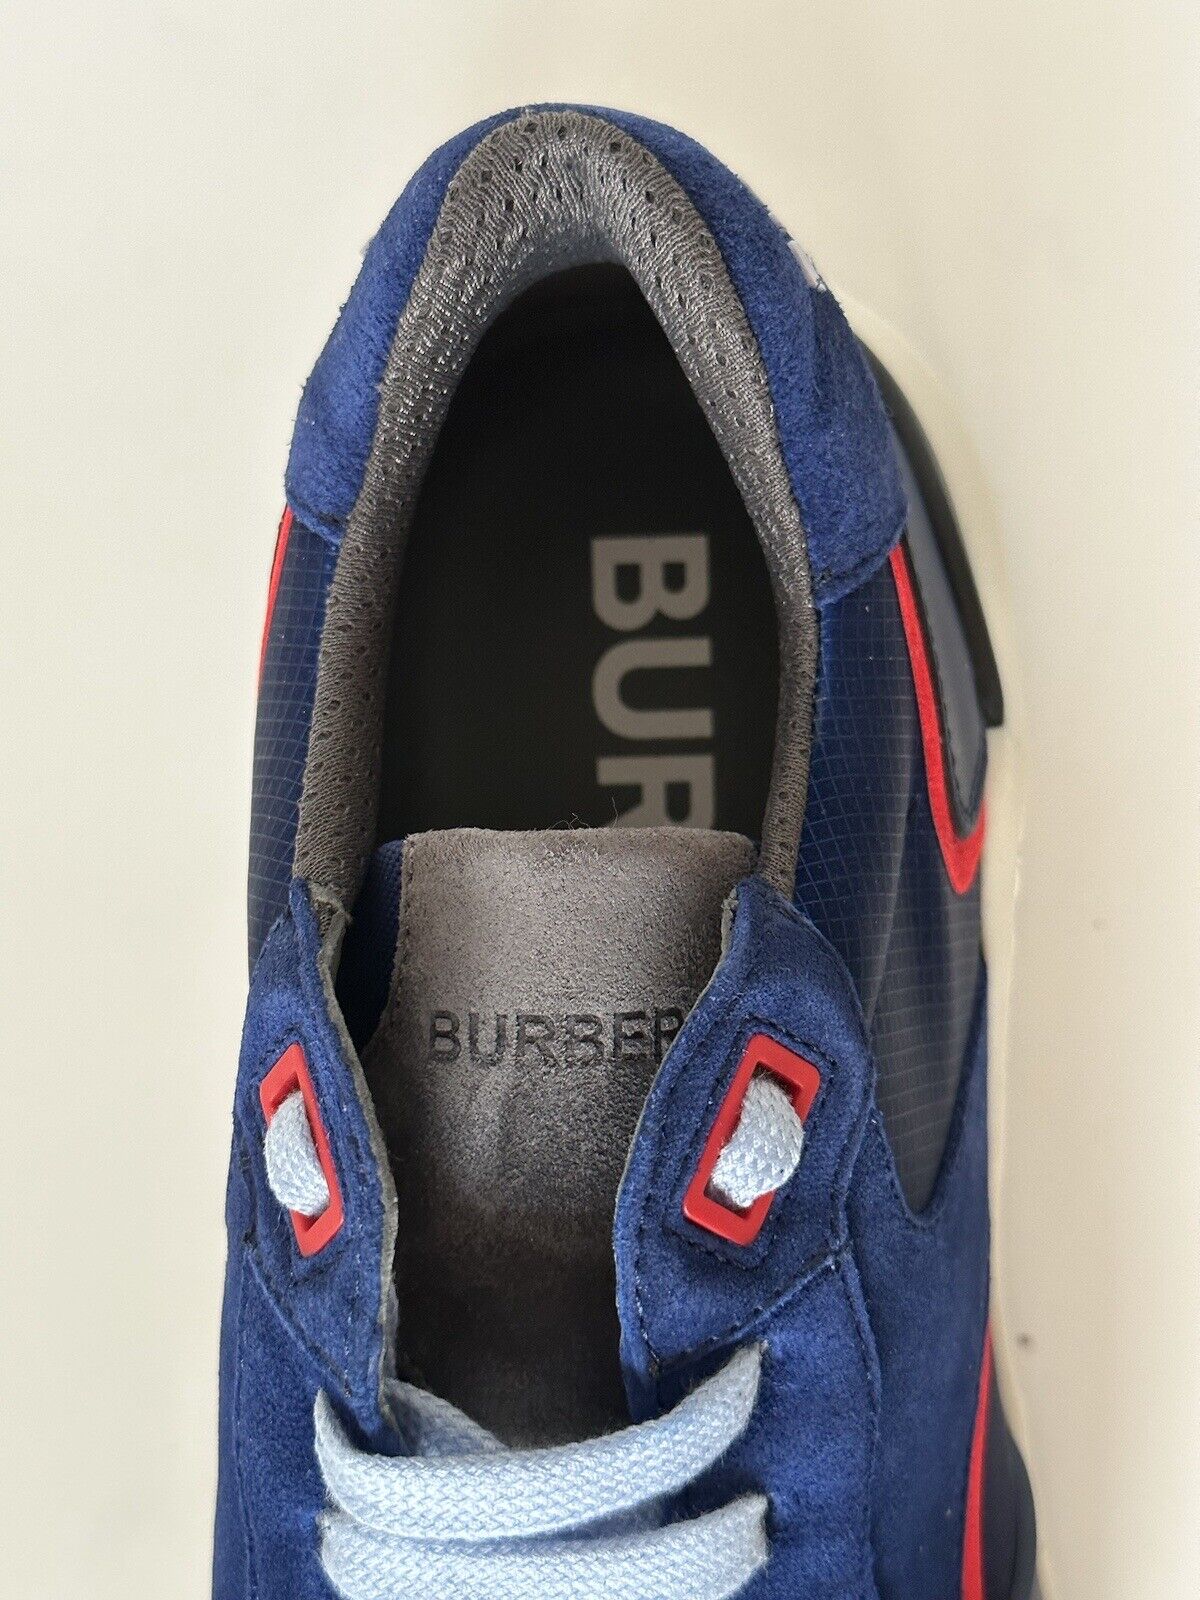 NIB Burberry Ramsey Men's Oceanic Blue Sneakers 8 US (41 Eu) 8045534 Italy